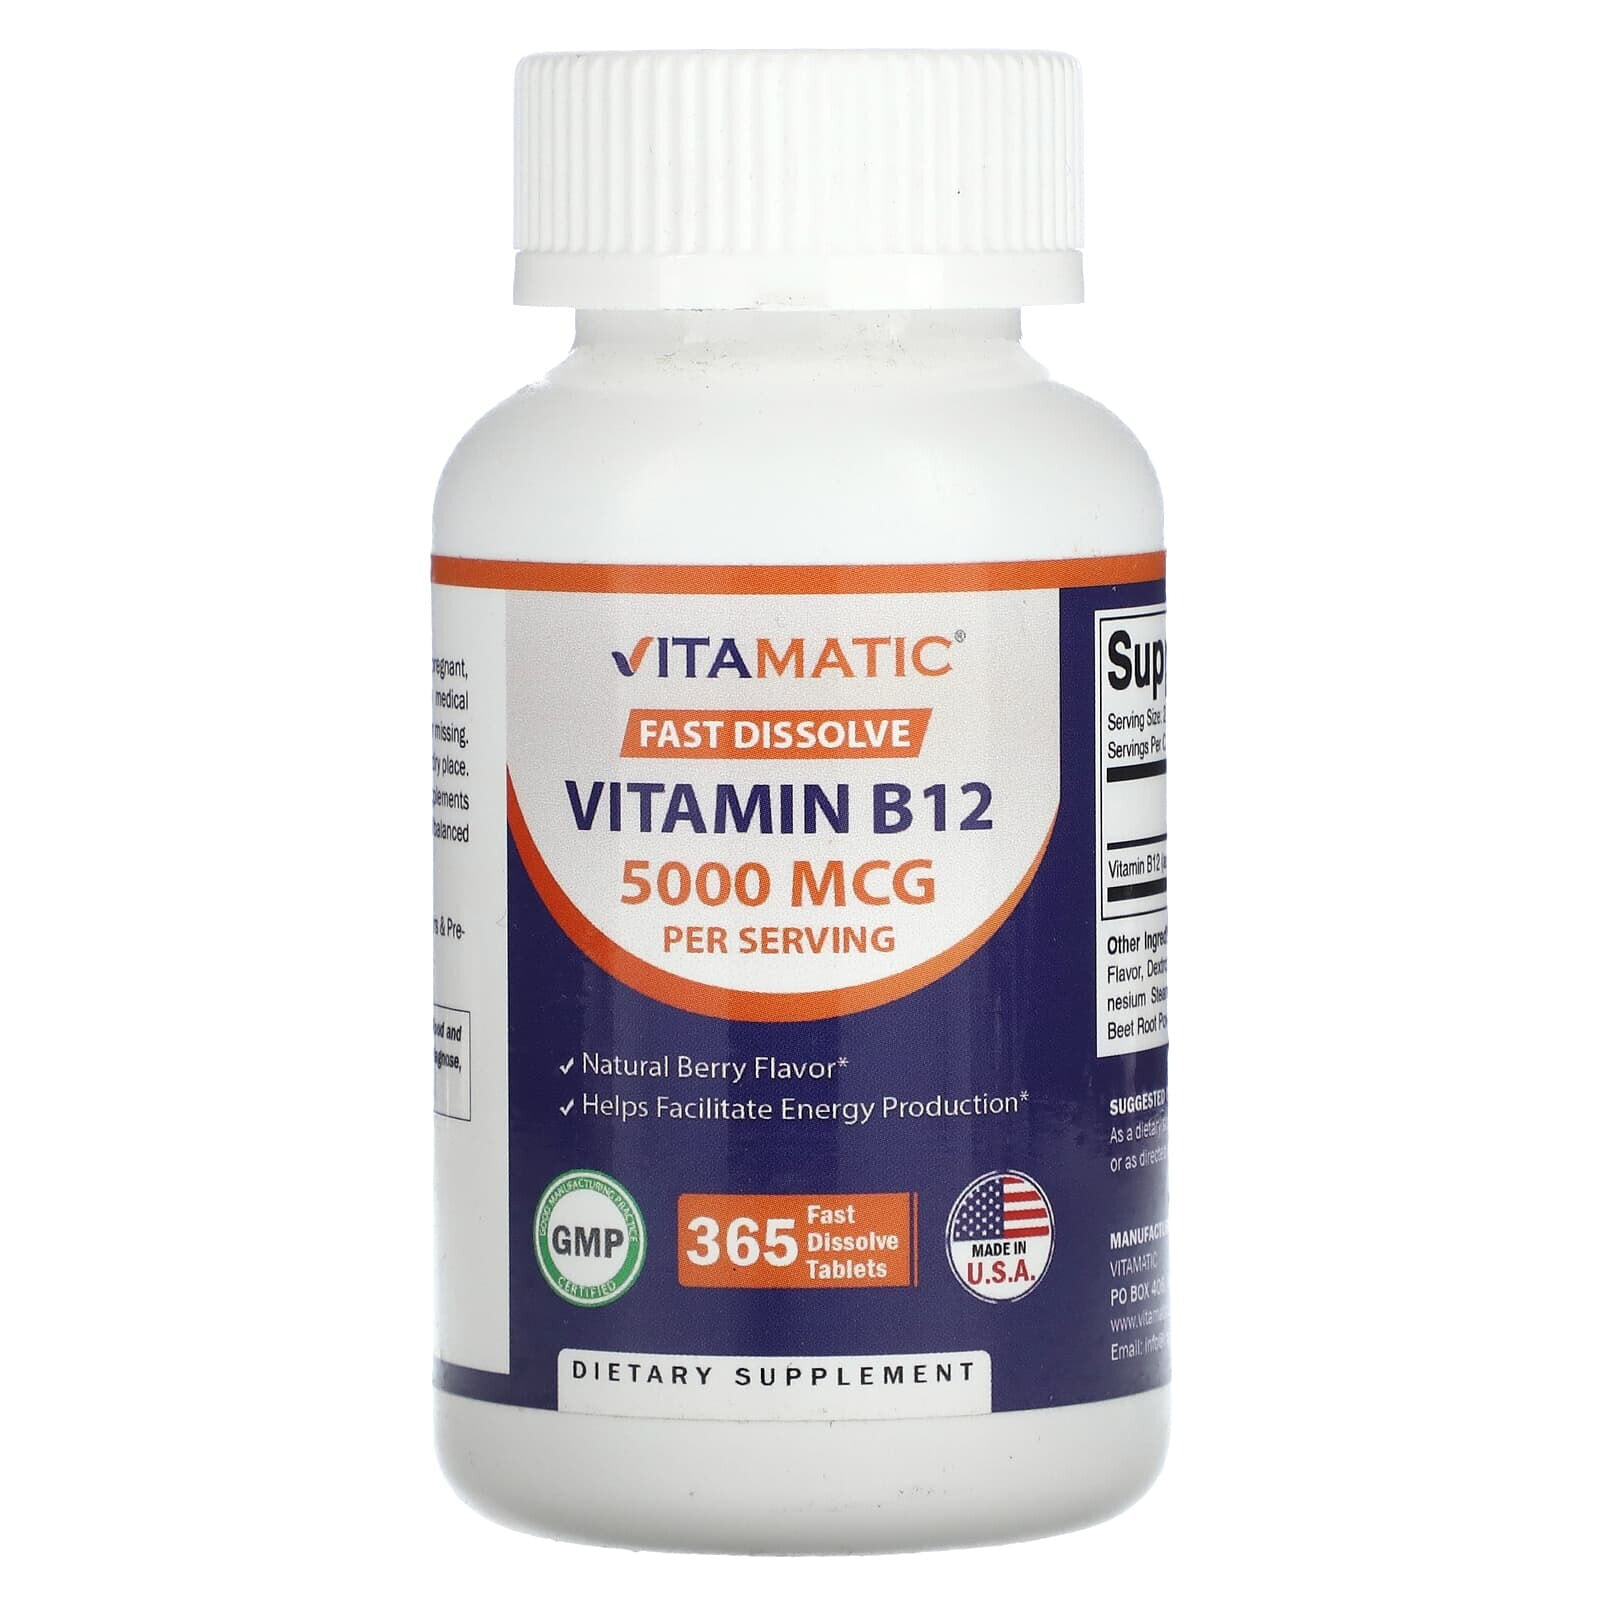 Vitamatic, Vitamin B12, Natural Berry, 2,500 mcg, 365 Fast Dissolve Tablets